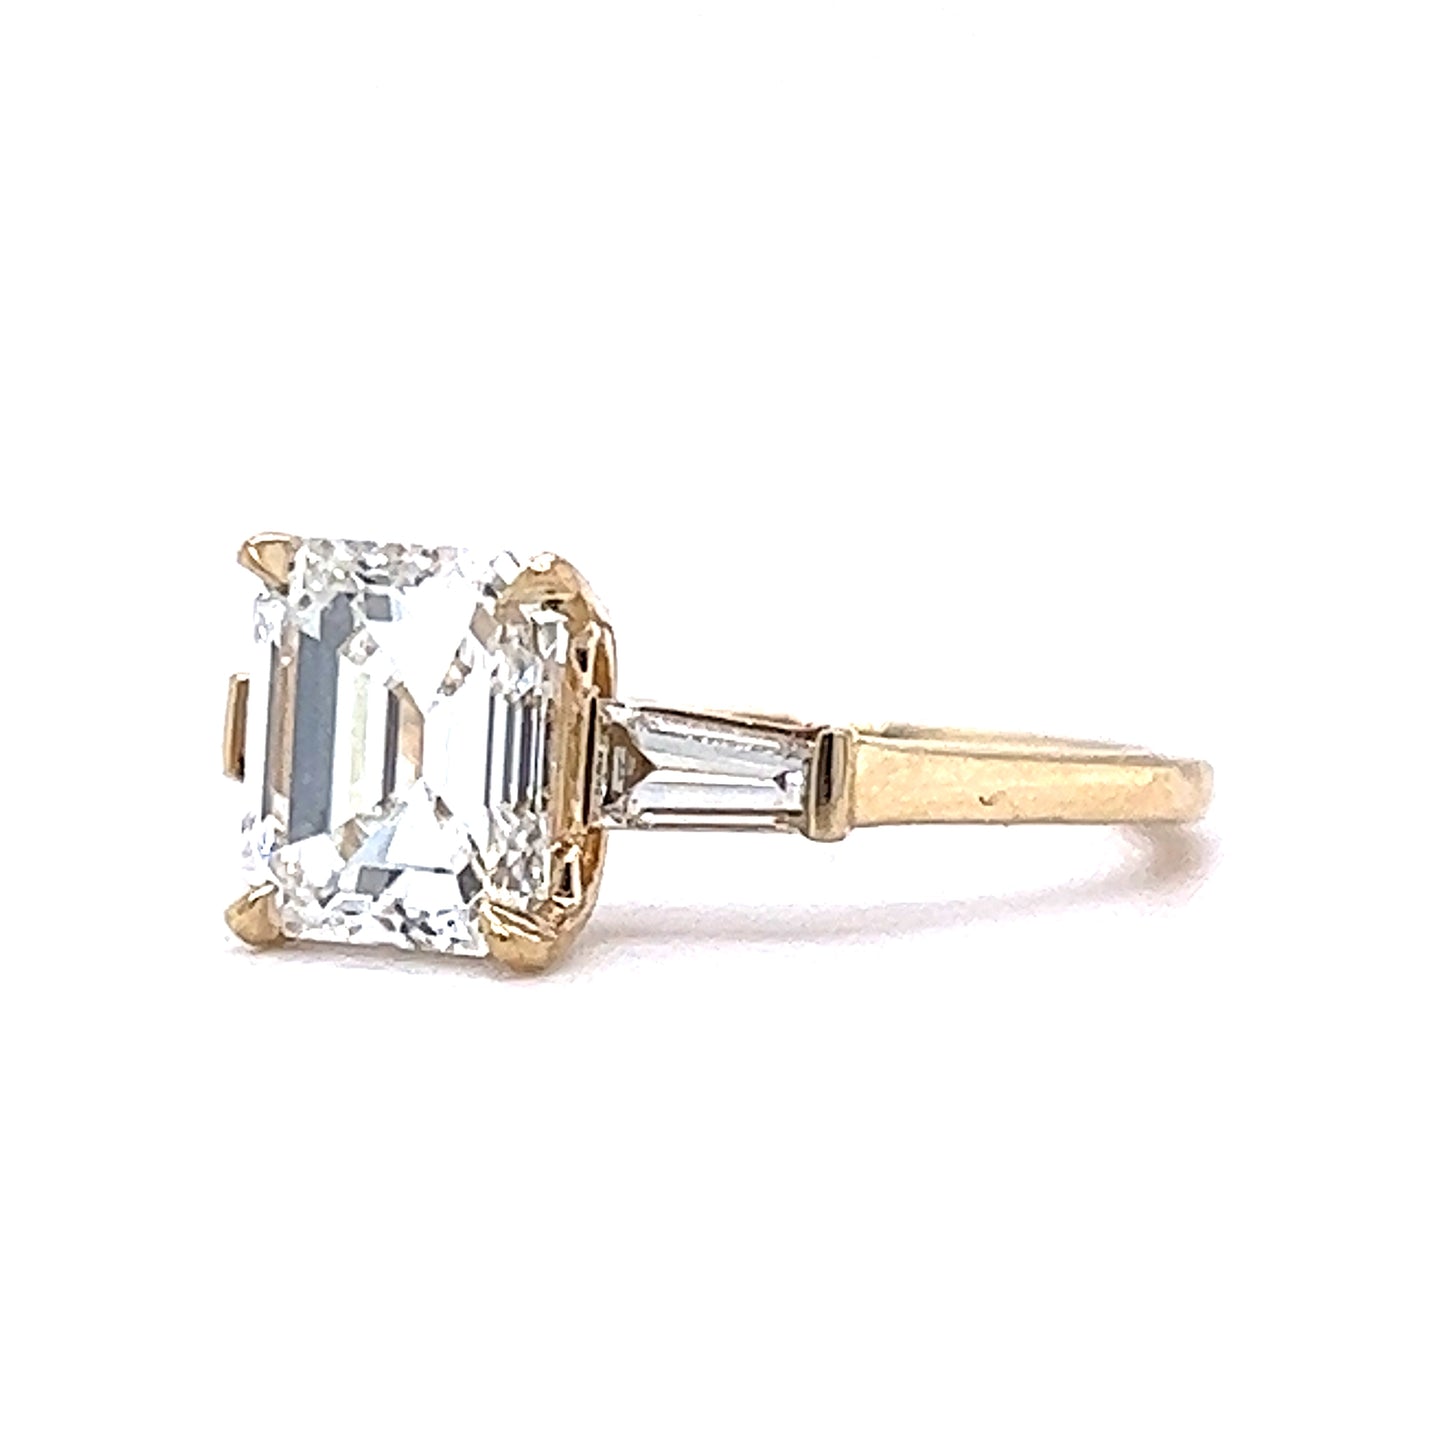 2.06 Emerald Cut Diamond Engagement Ring in 14k Yellow Gold